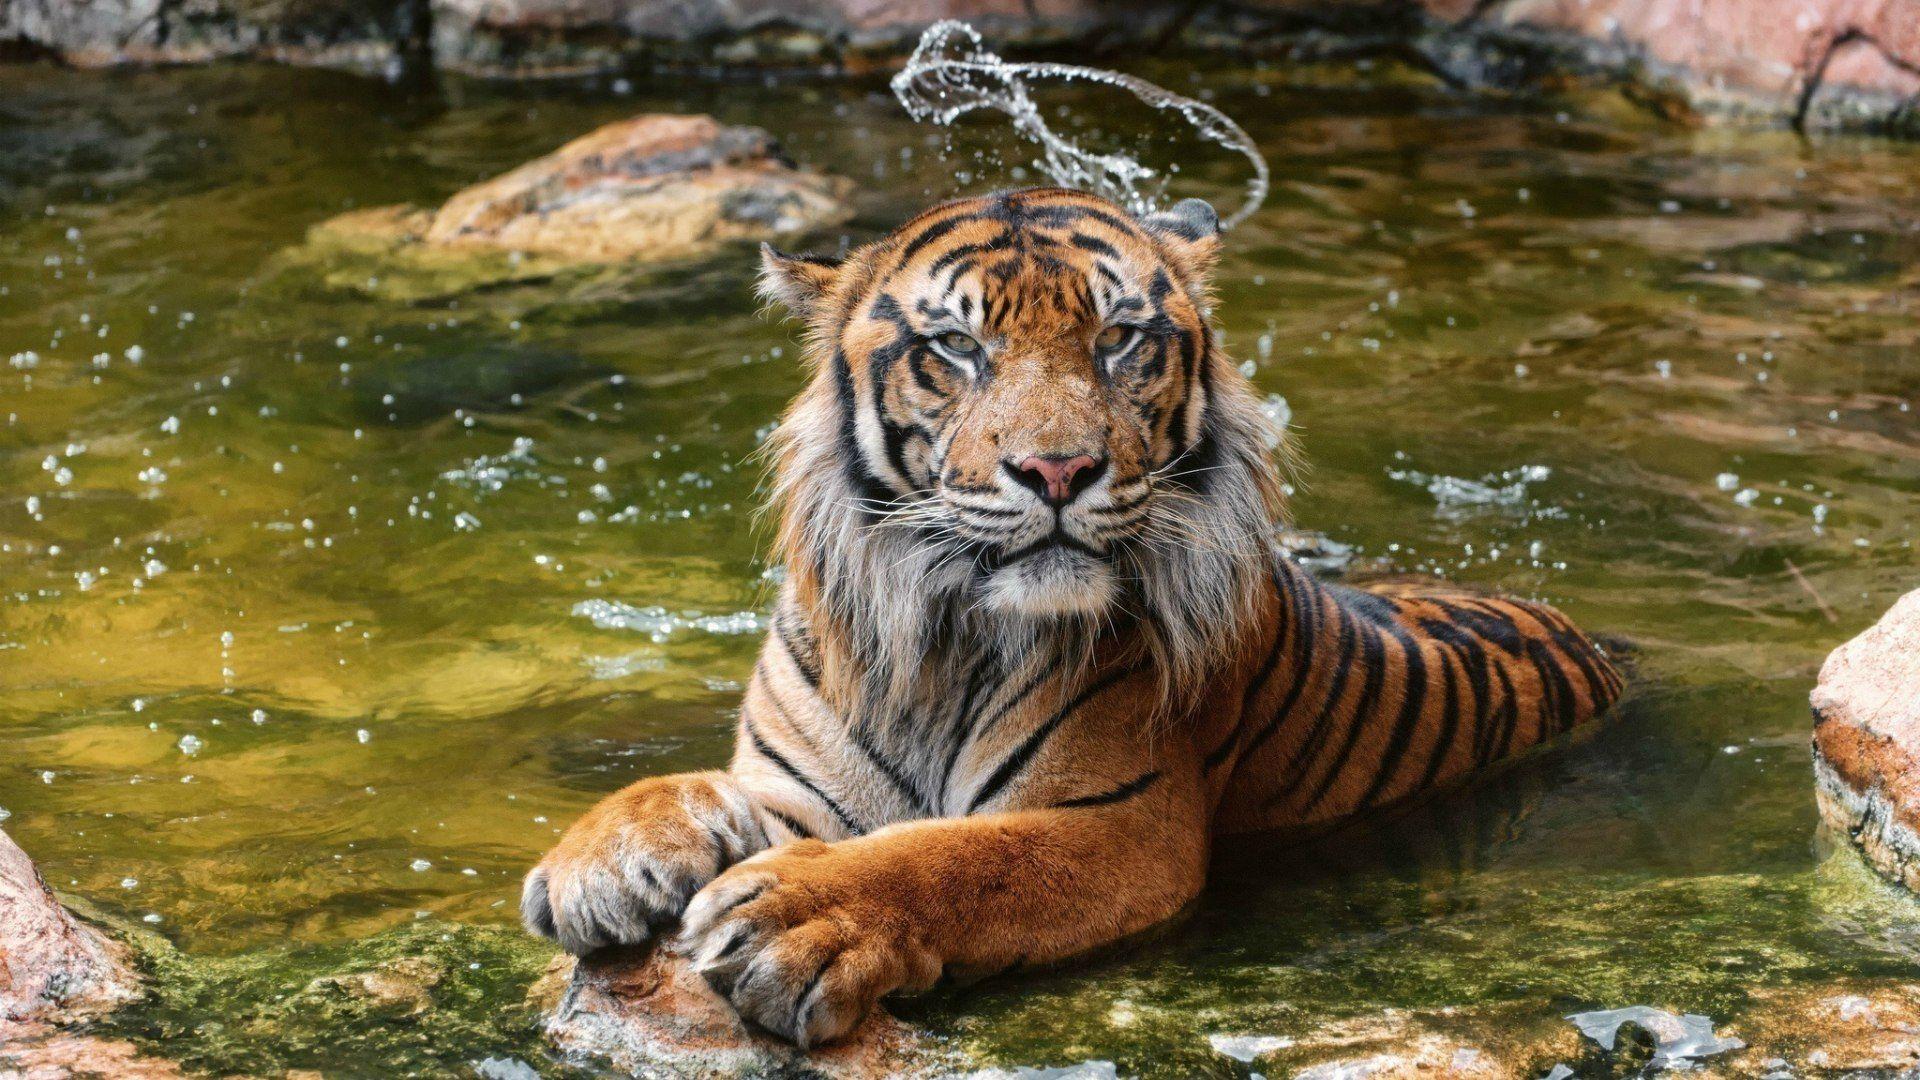 Animals Wild cats Sumatran Tiger in water 095698